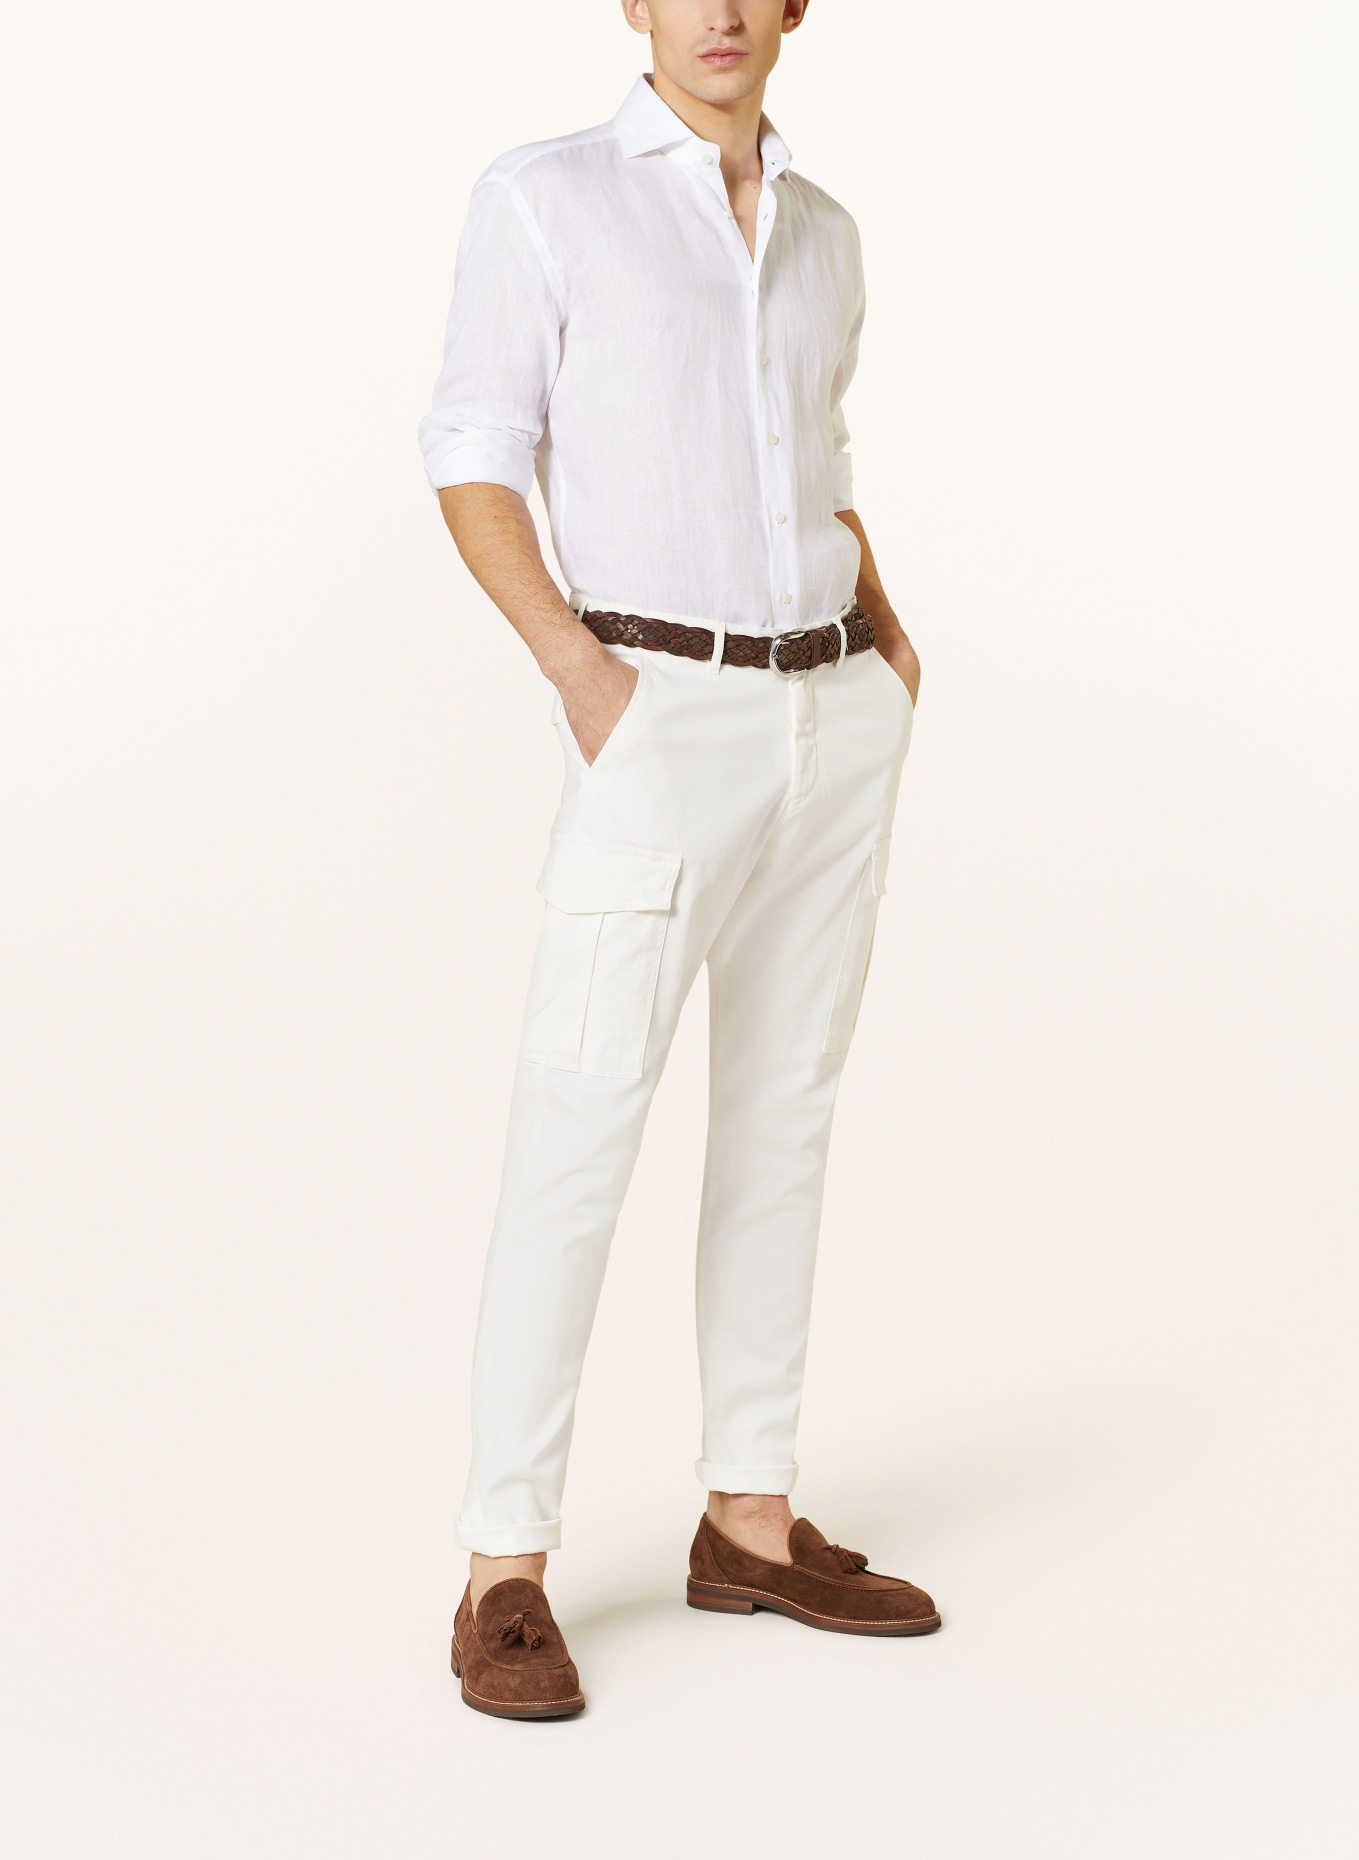 ARTIGIANO Linen shirt classic fit, Color: 1 uni white (Image 2)